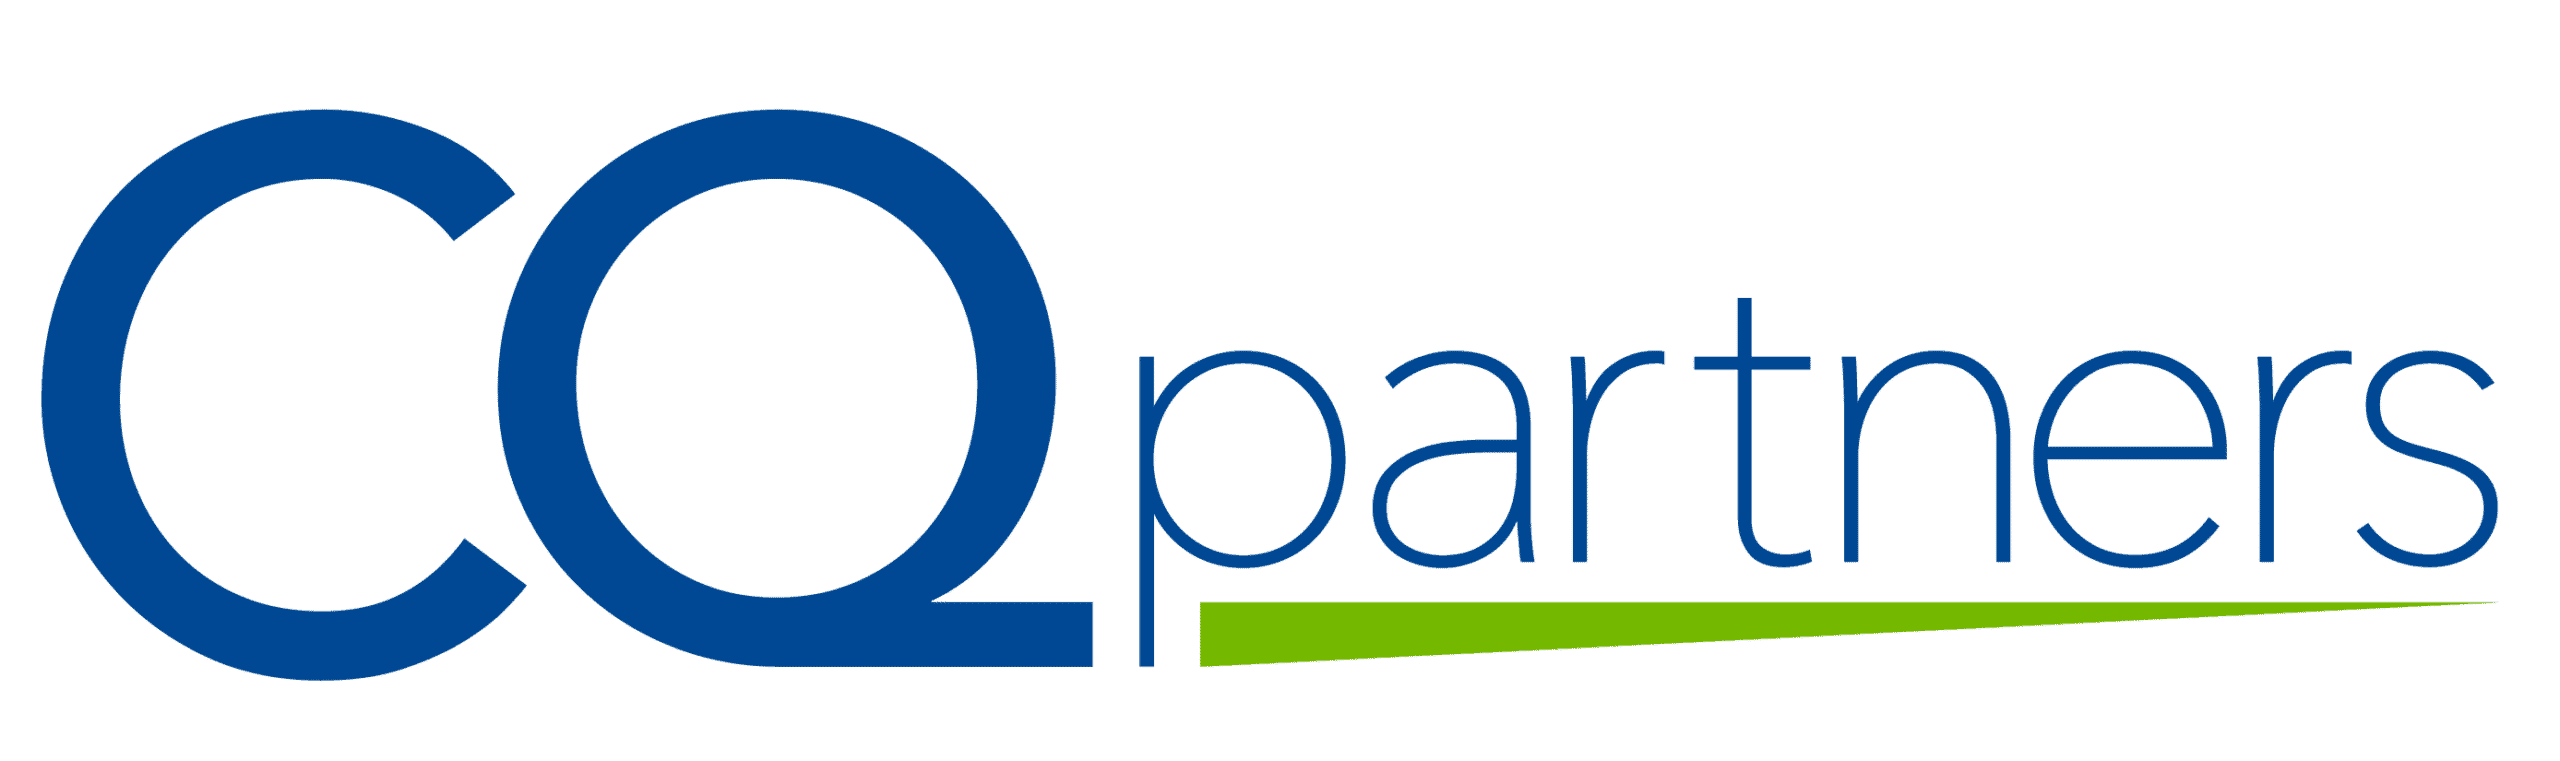 CQ Partners Logo